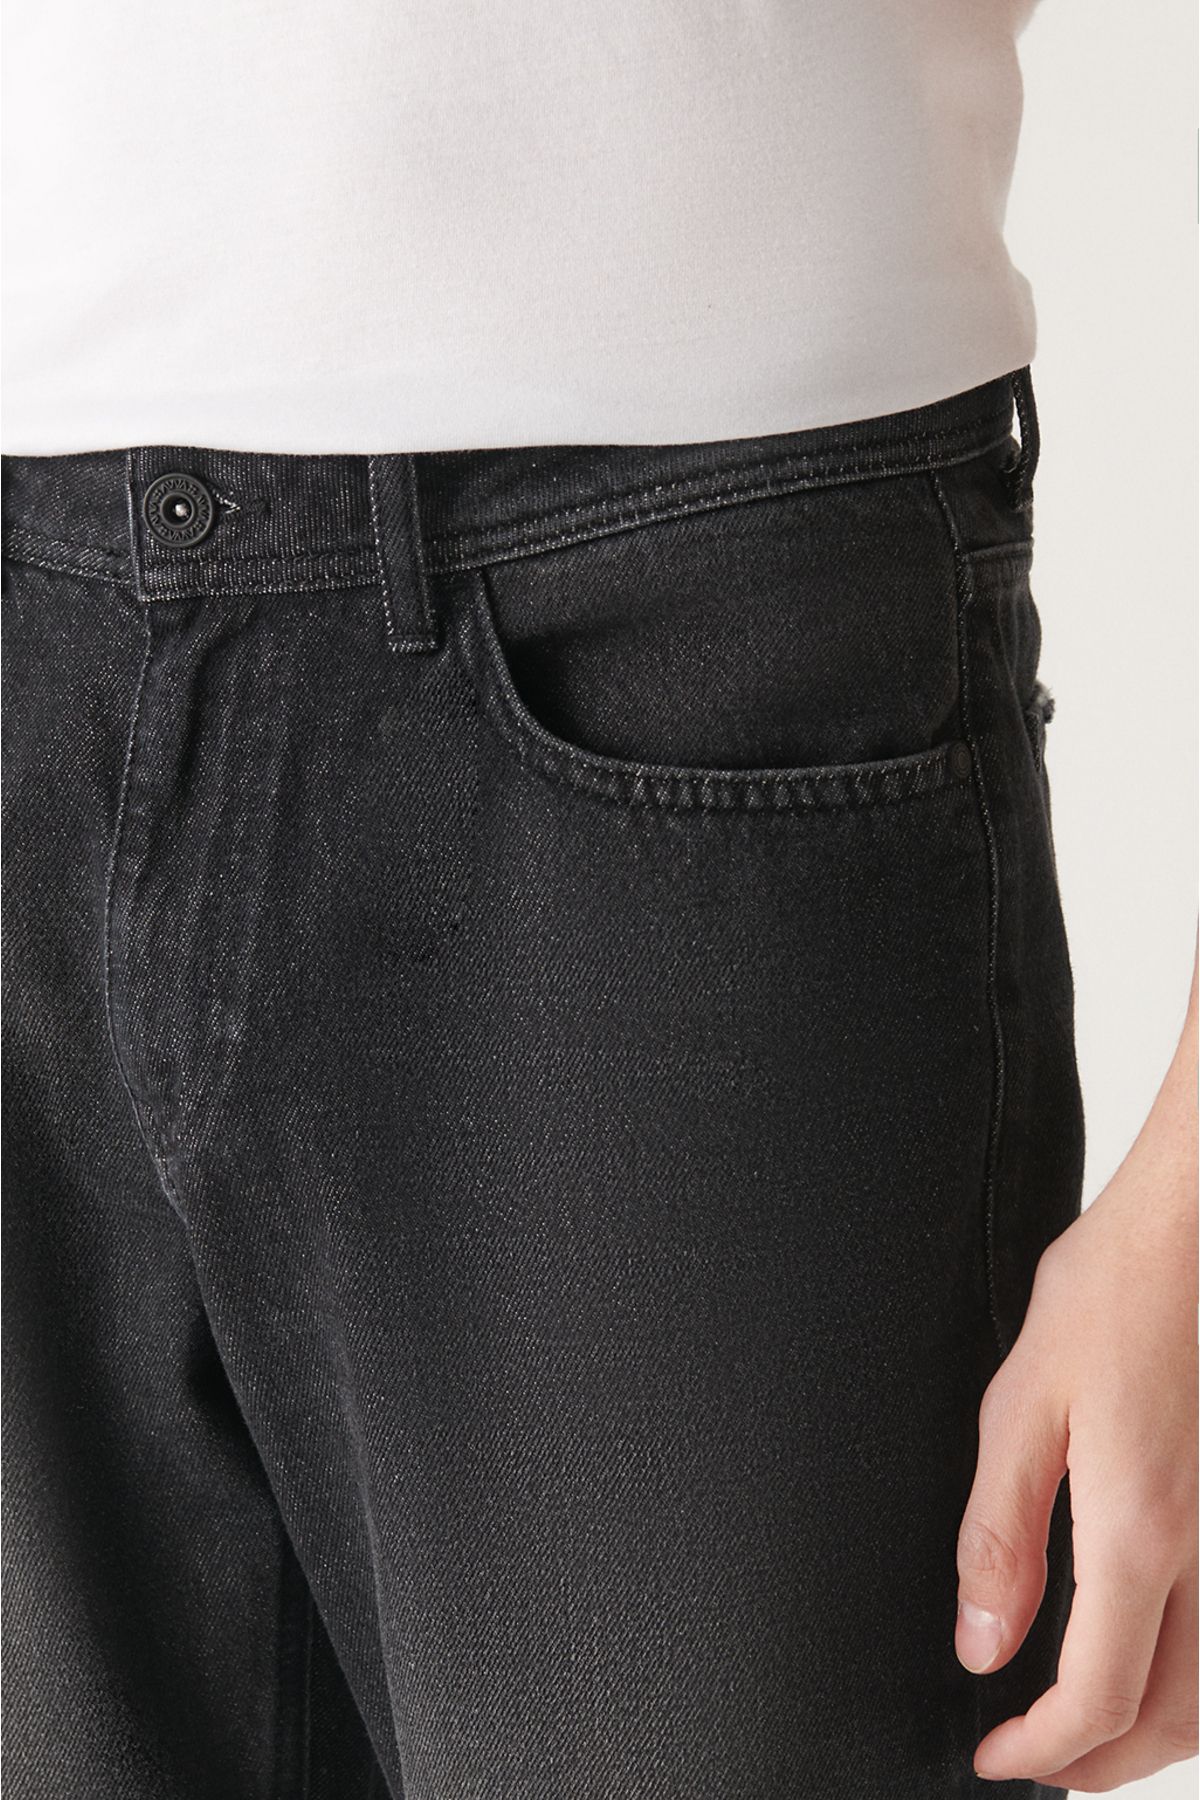 Avva شلوار جین با برش معمولی مردانه مشکی وینتیج شسته 100% پنبه ای استاندارد A22Y3524